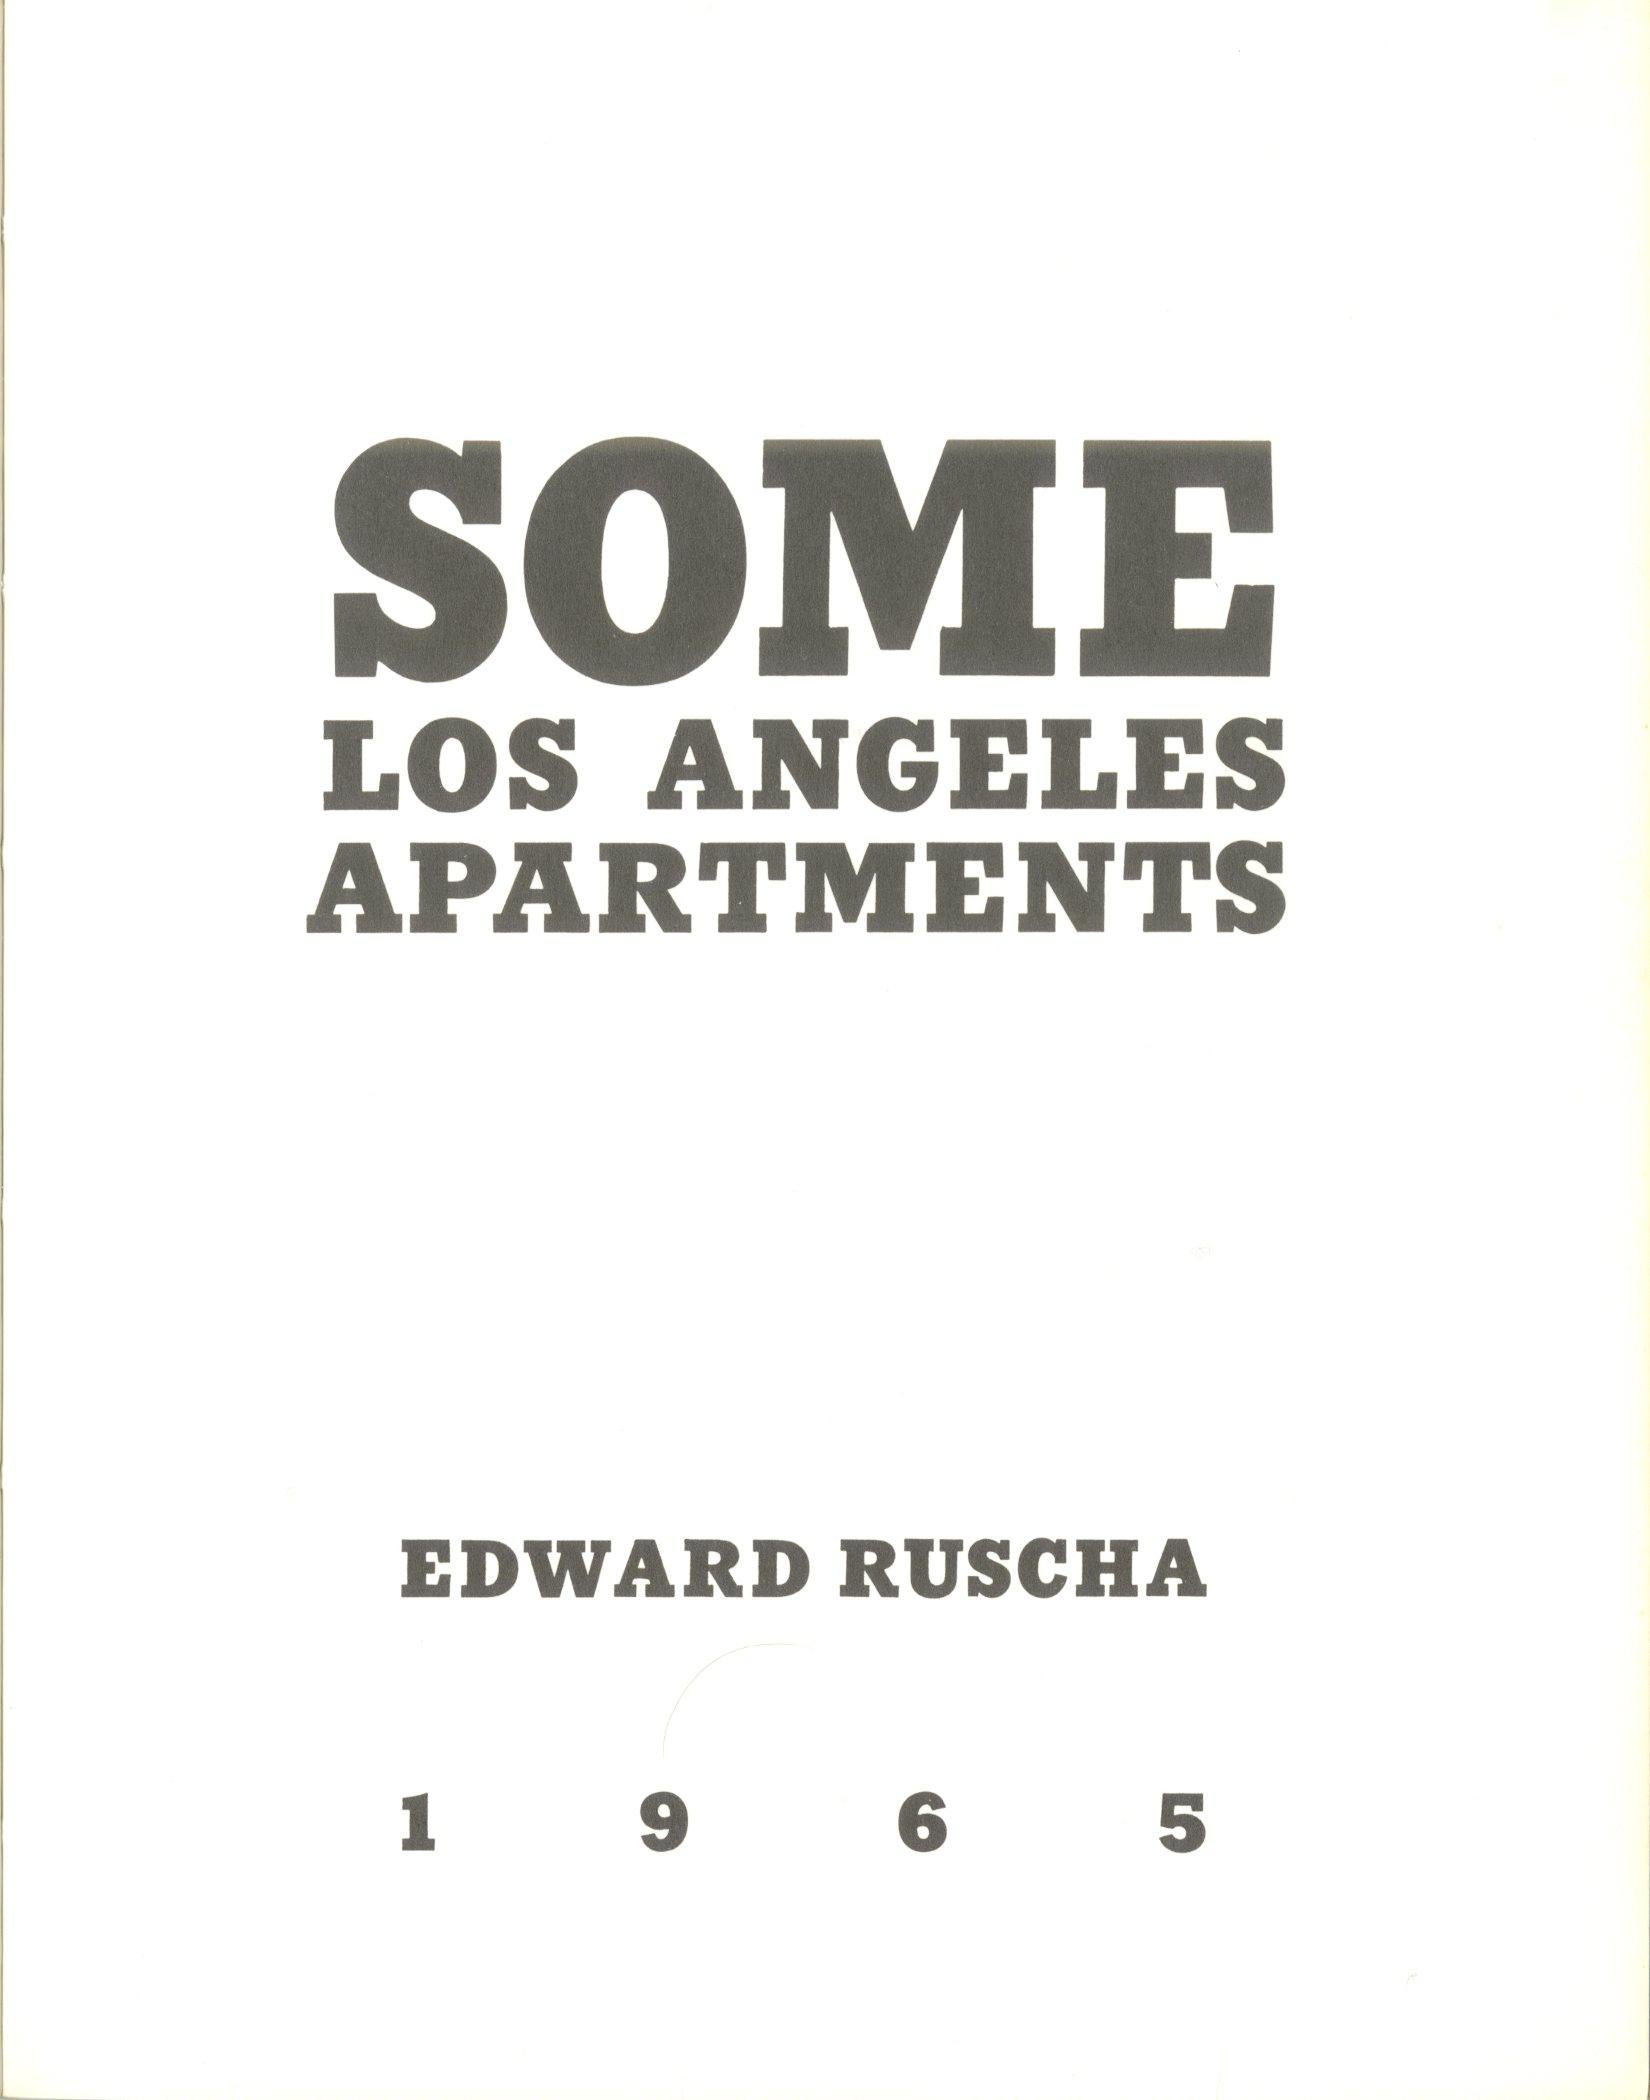 Certains appartements de Los Angeles - True, Stated 1st Edition of only 700 Artist Book - Pop Art Print par Ed Ruscha